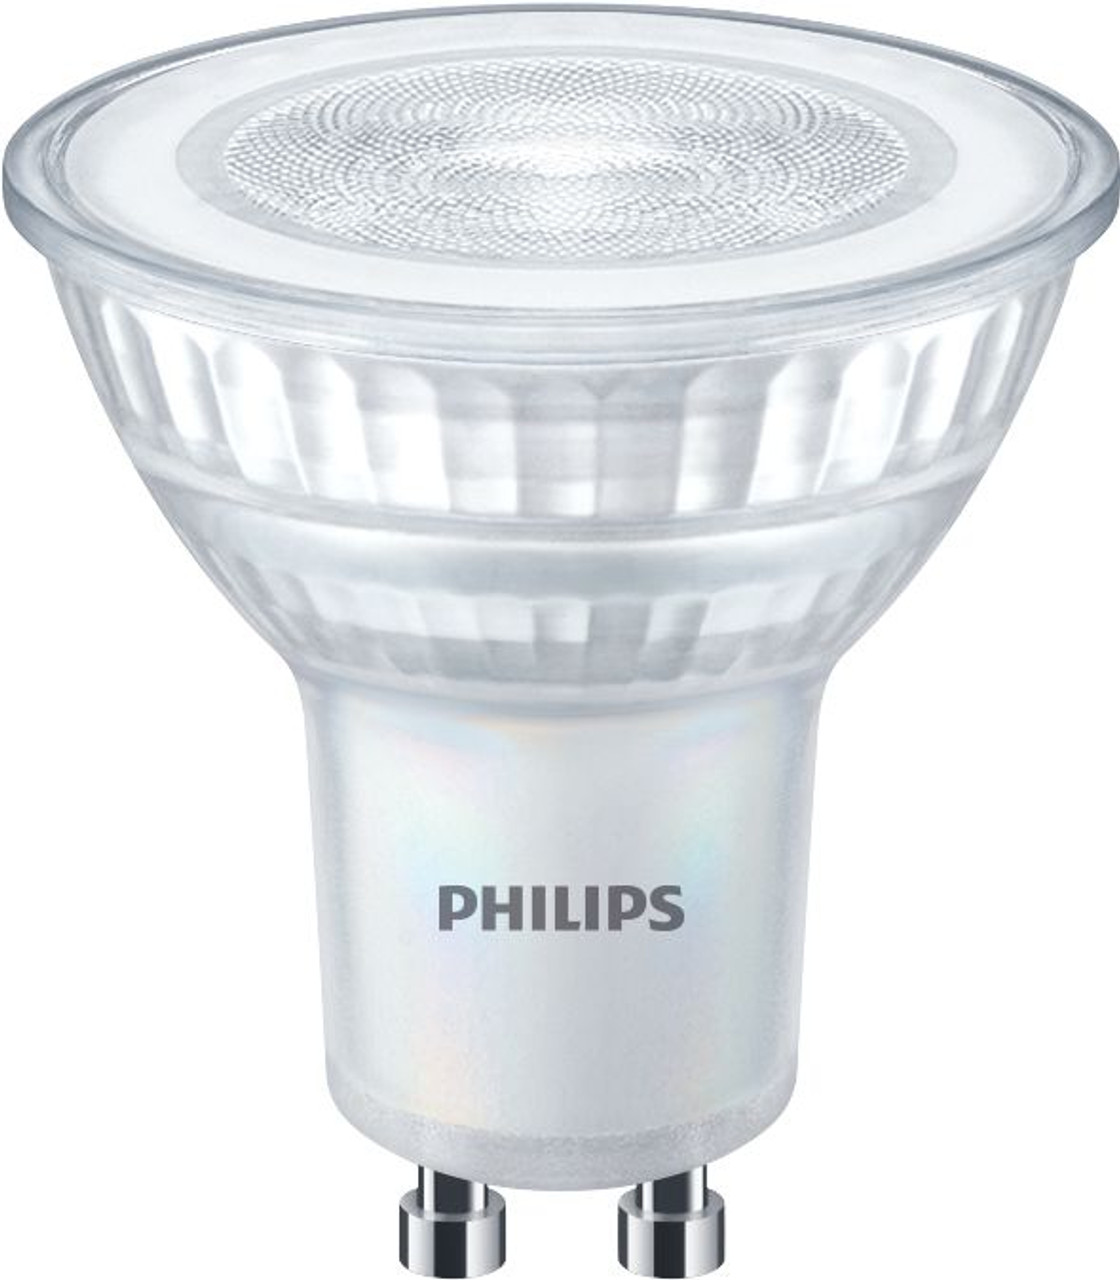 Philips Lighting MASTER LEDspot VLE D 5-50W GU10 830 36D LED Spots